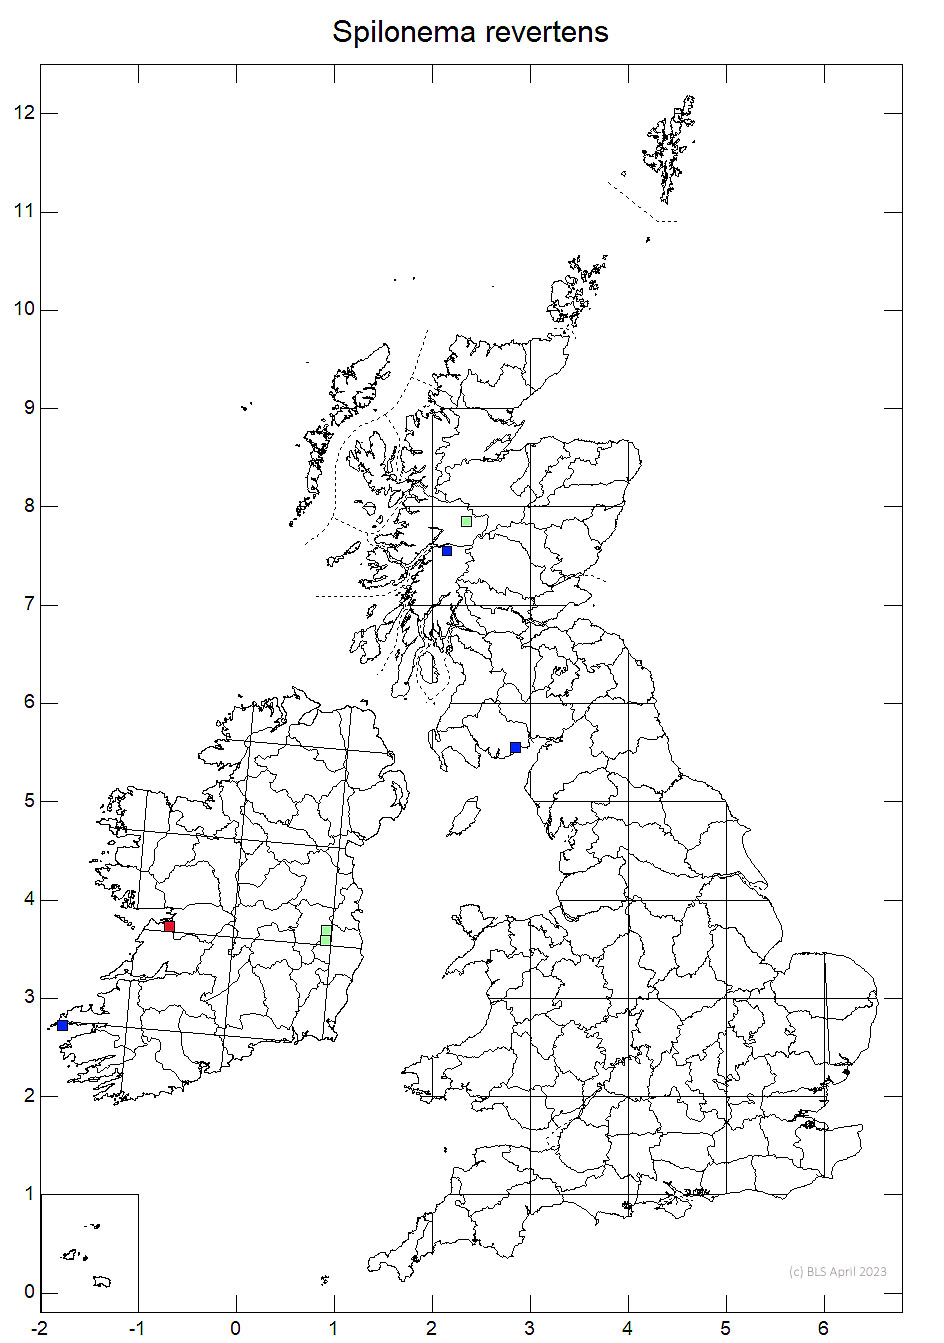 Spilonema revertens 10km sq distribution map